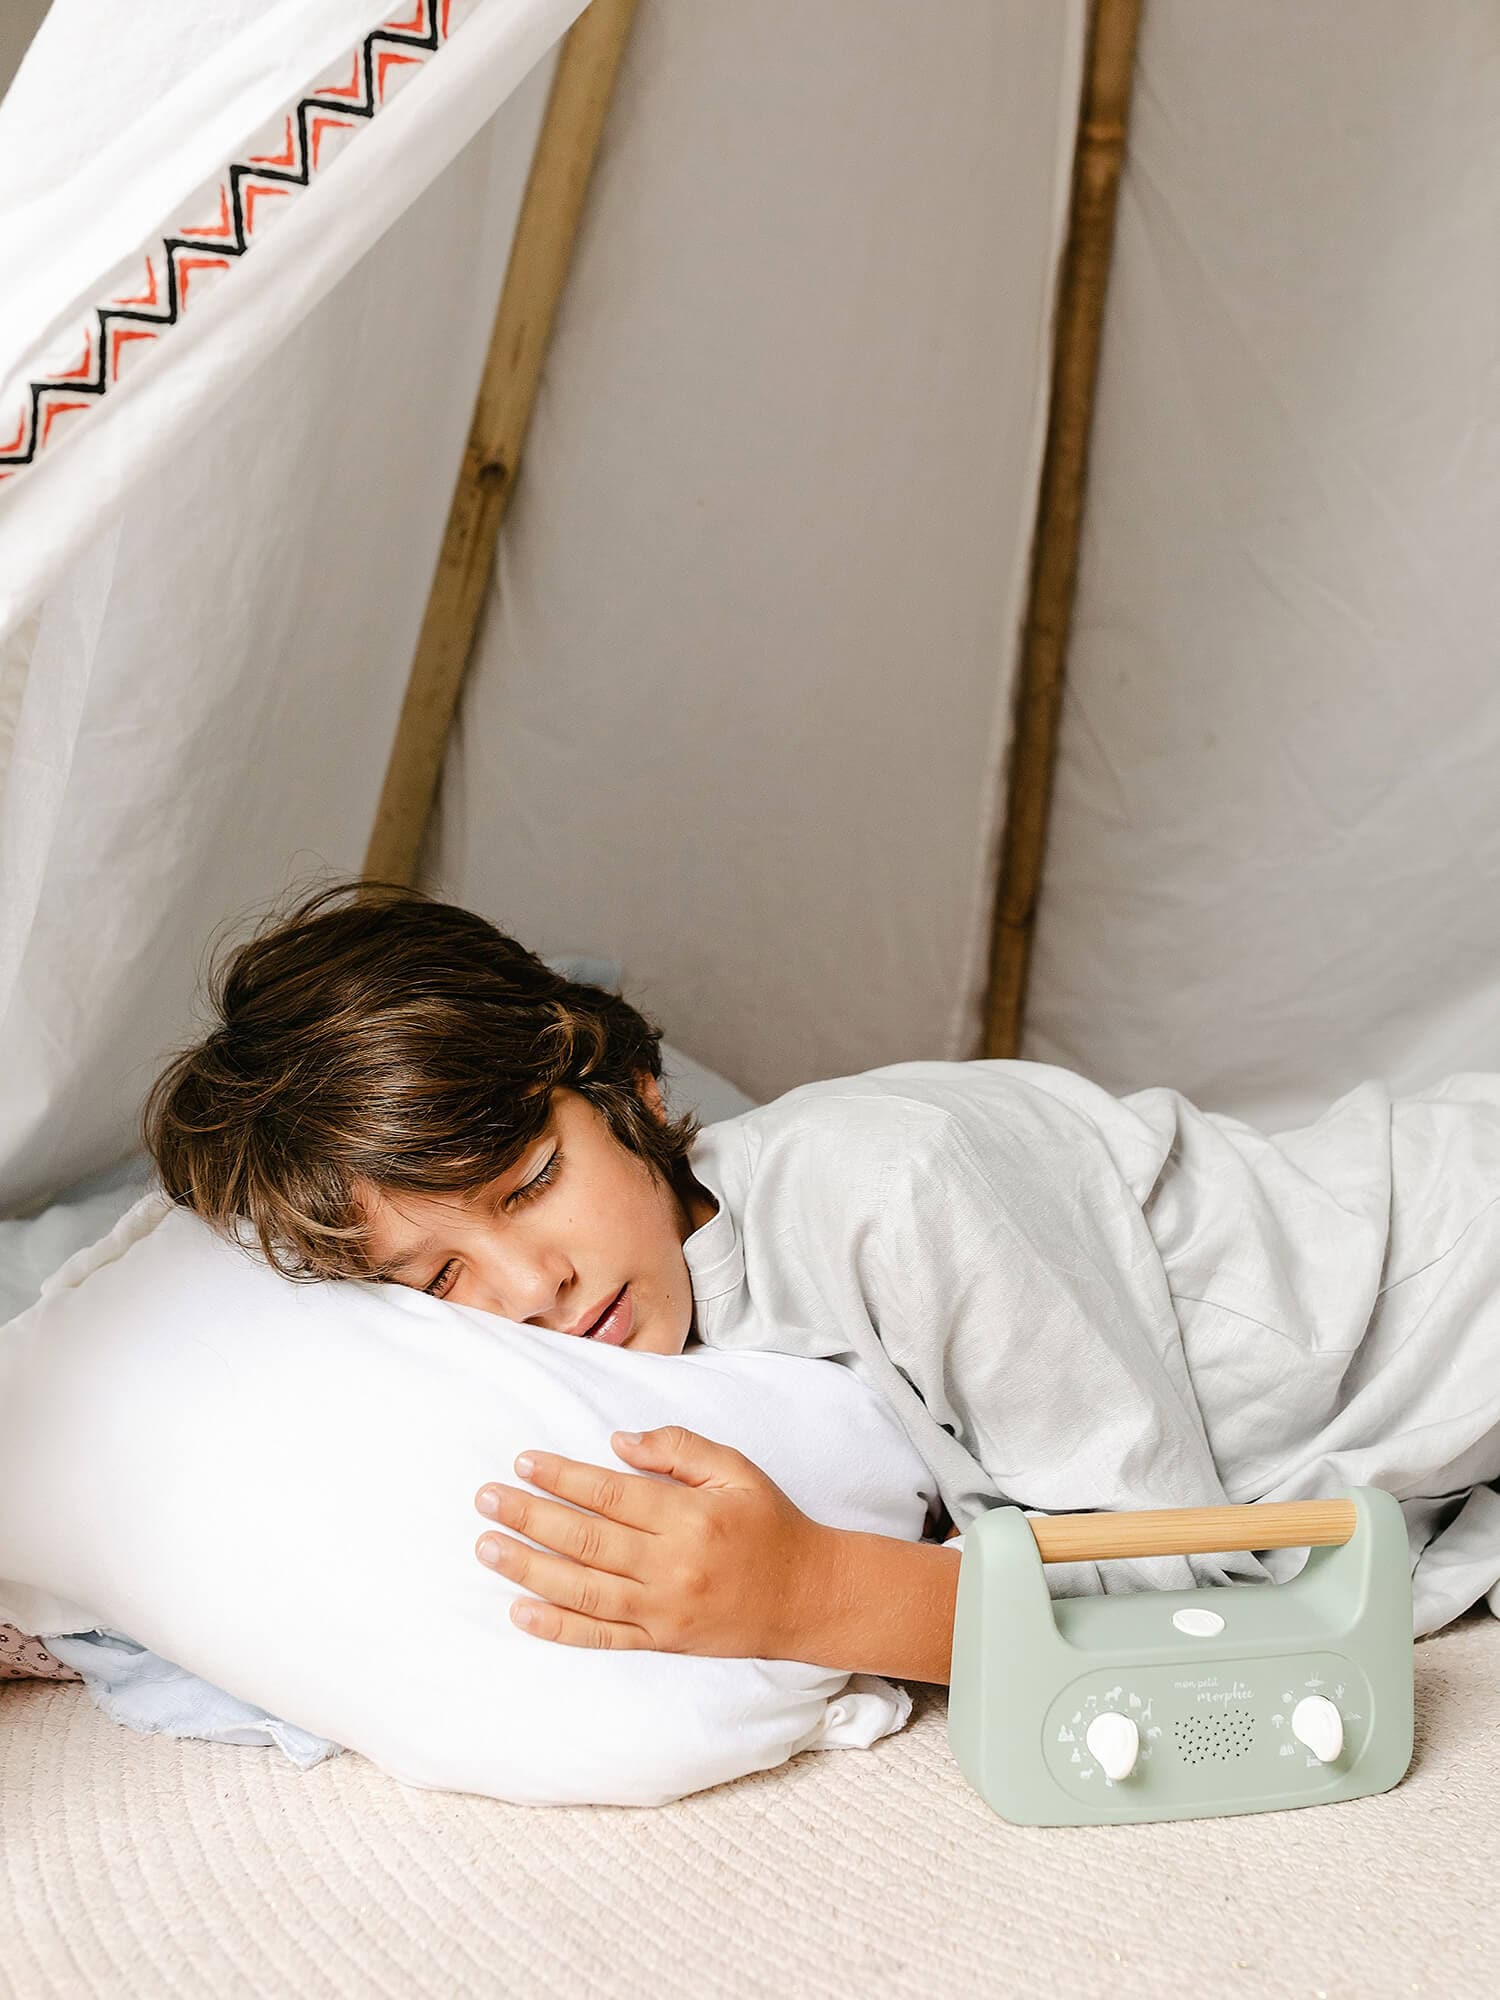 My Little Morphée: The Non-Digital Sleep Companion for Children